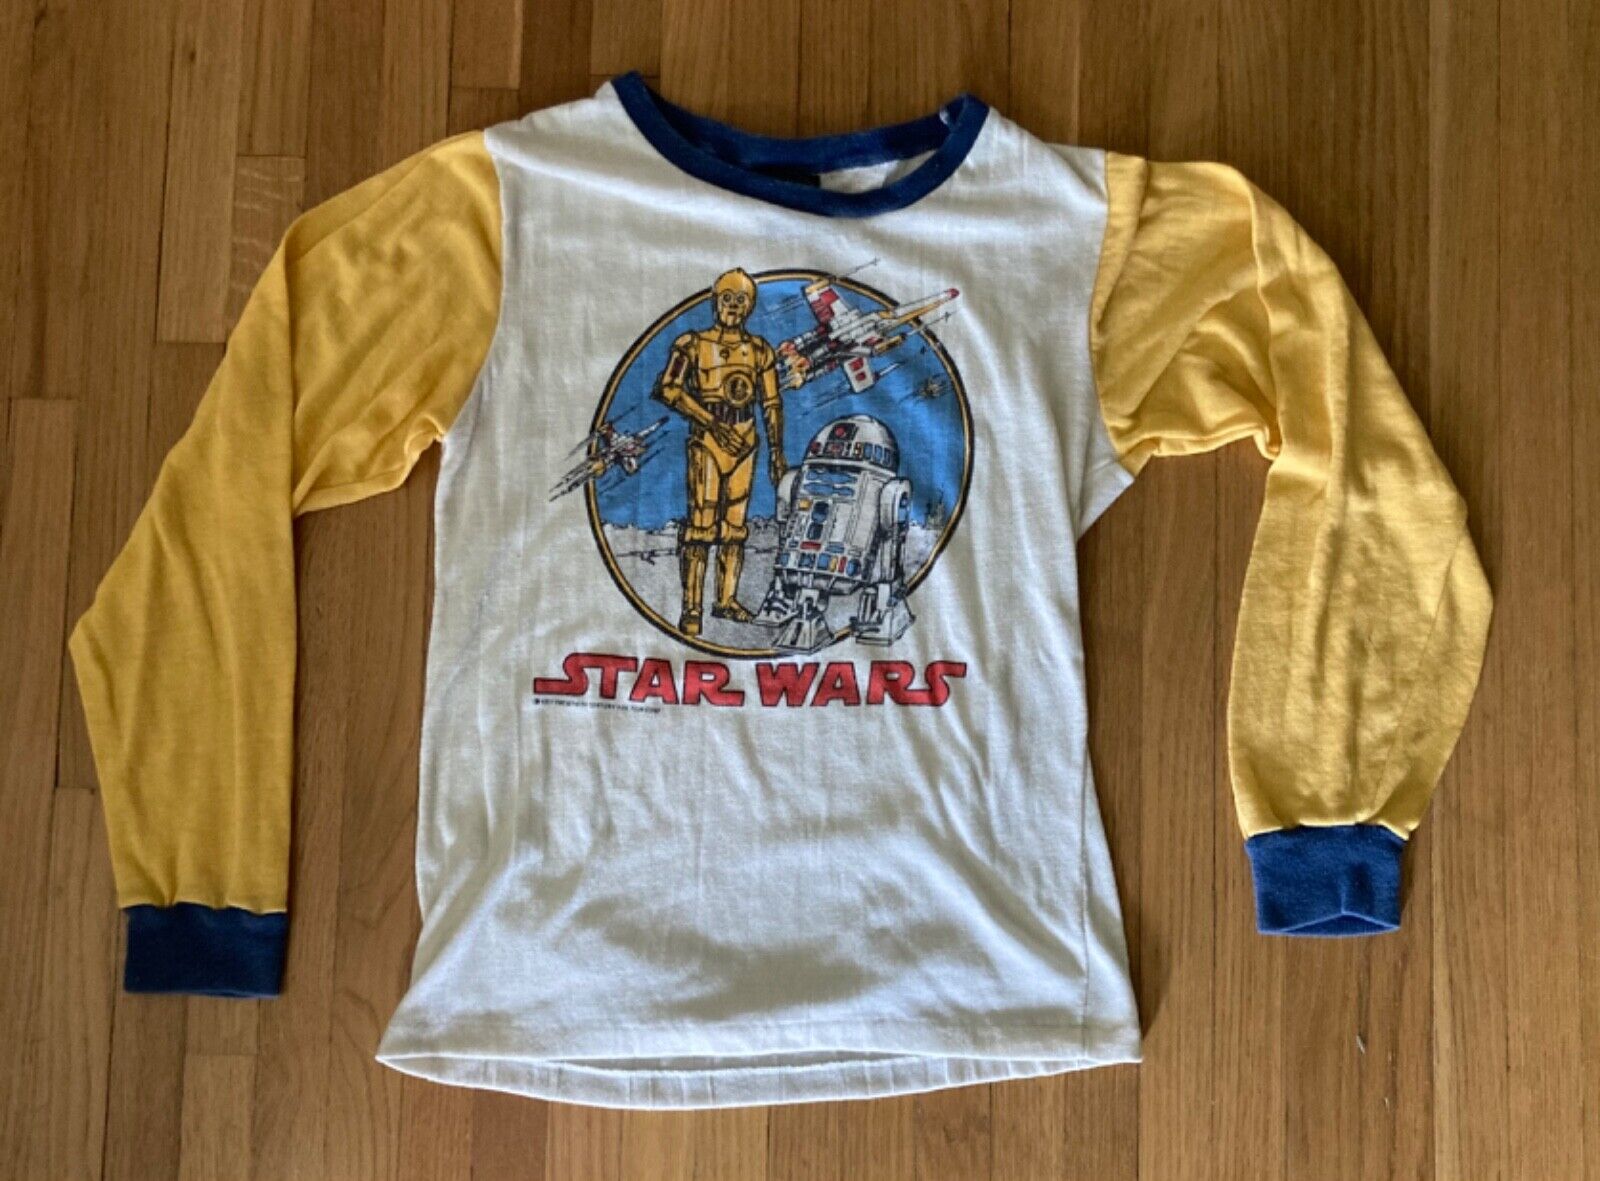 Original 1977 Star Wars Youth Pajama Top - Large